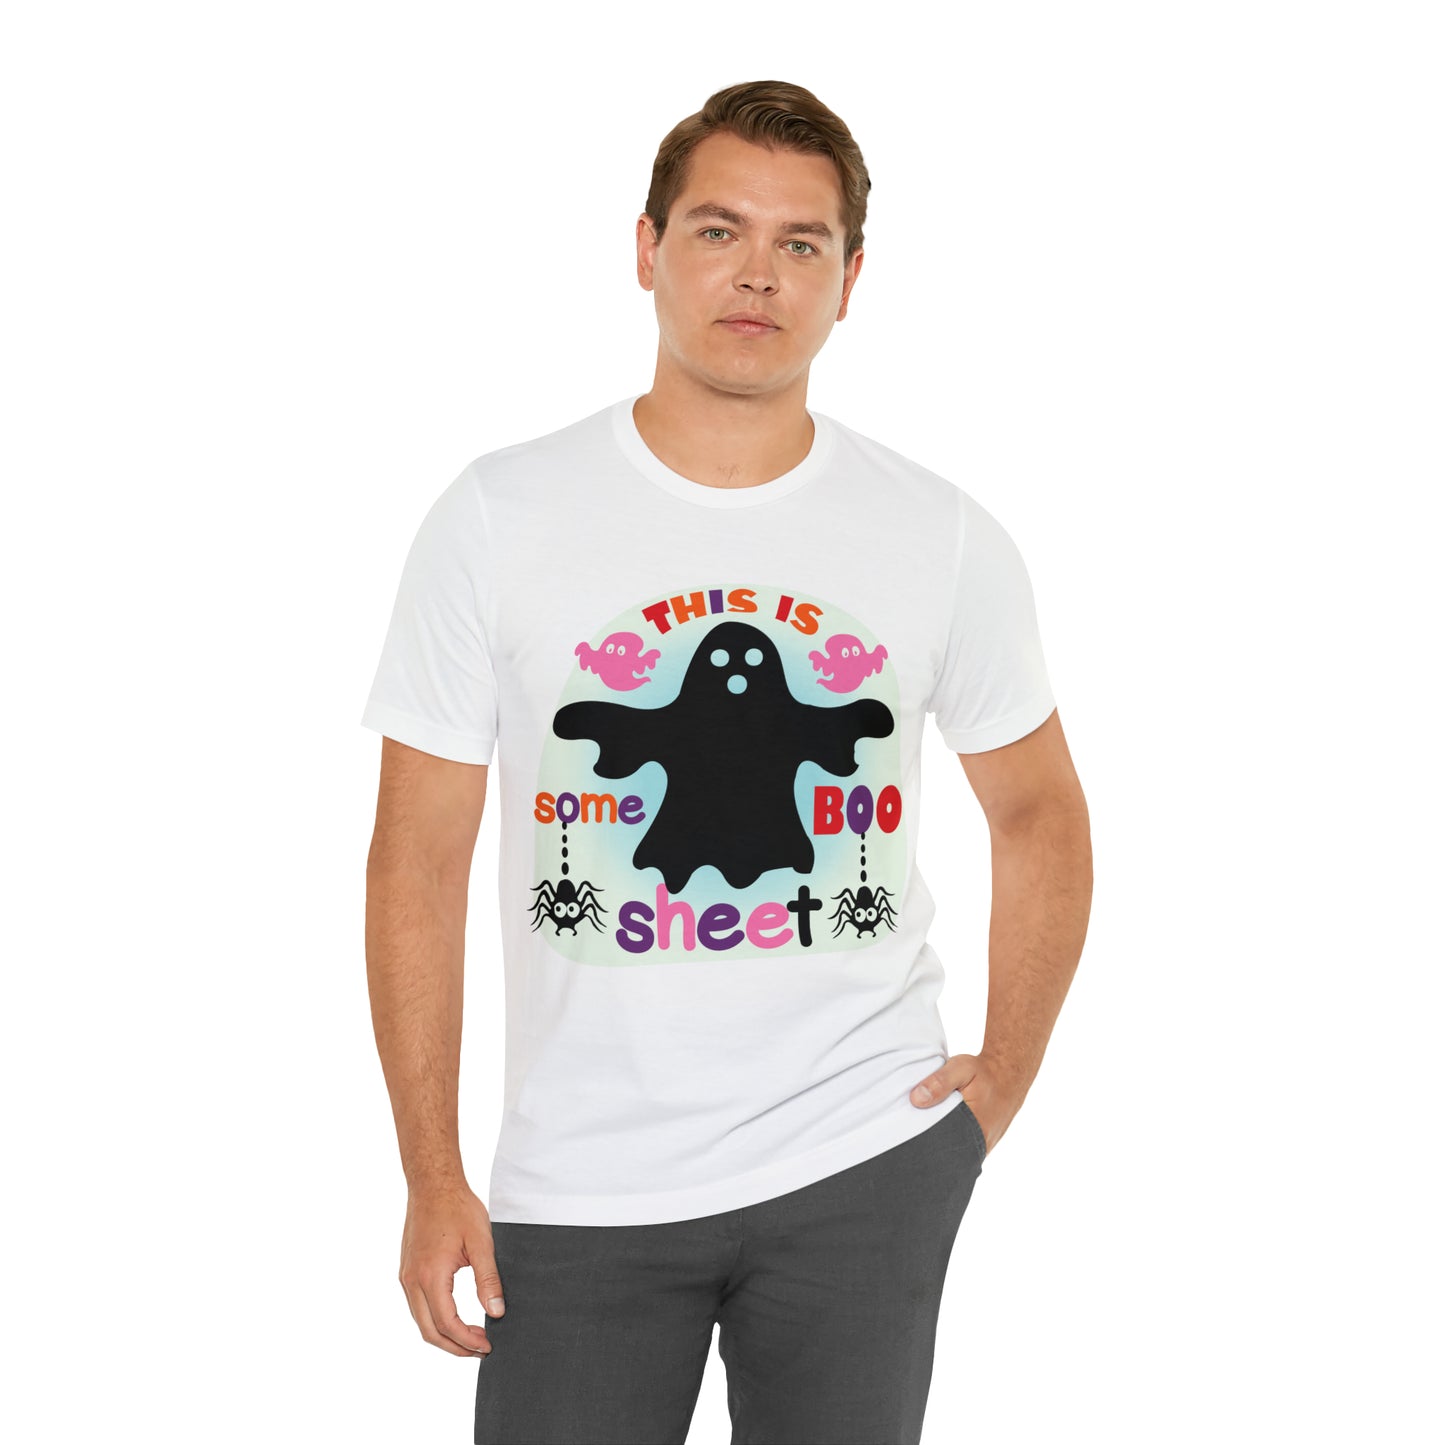 This Is Some Boo Sheet shirt, Boo Sheet Shirt, Spooky Season Tee, Retro Halloween Kids Shirt, Funny Halloween Ghost Shirt, T656